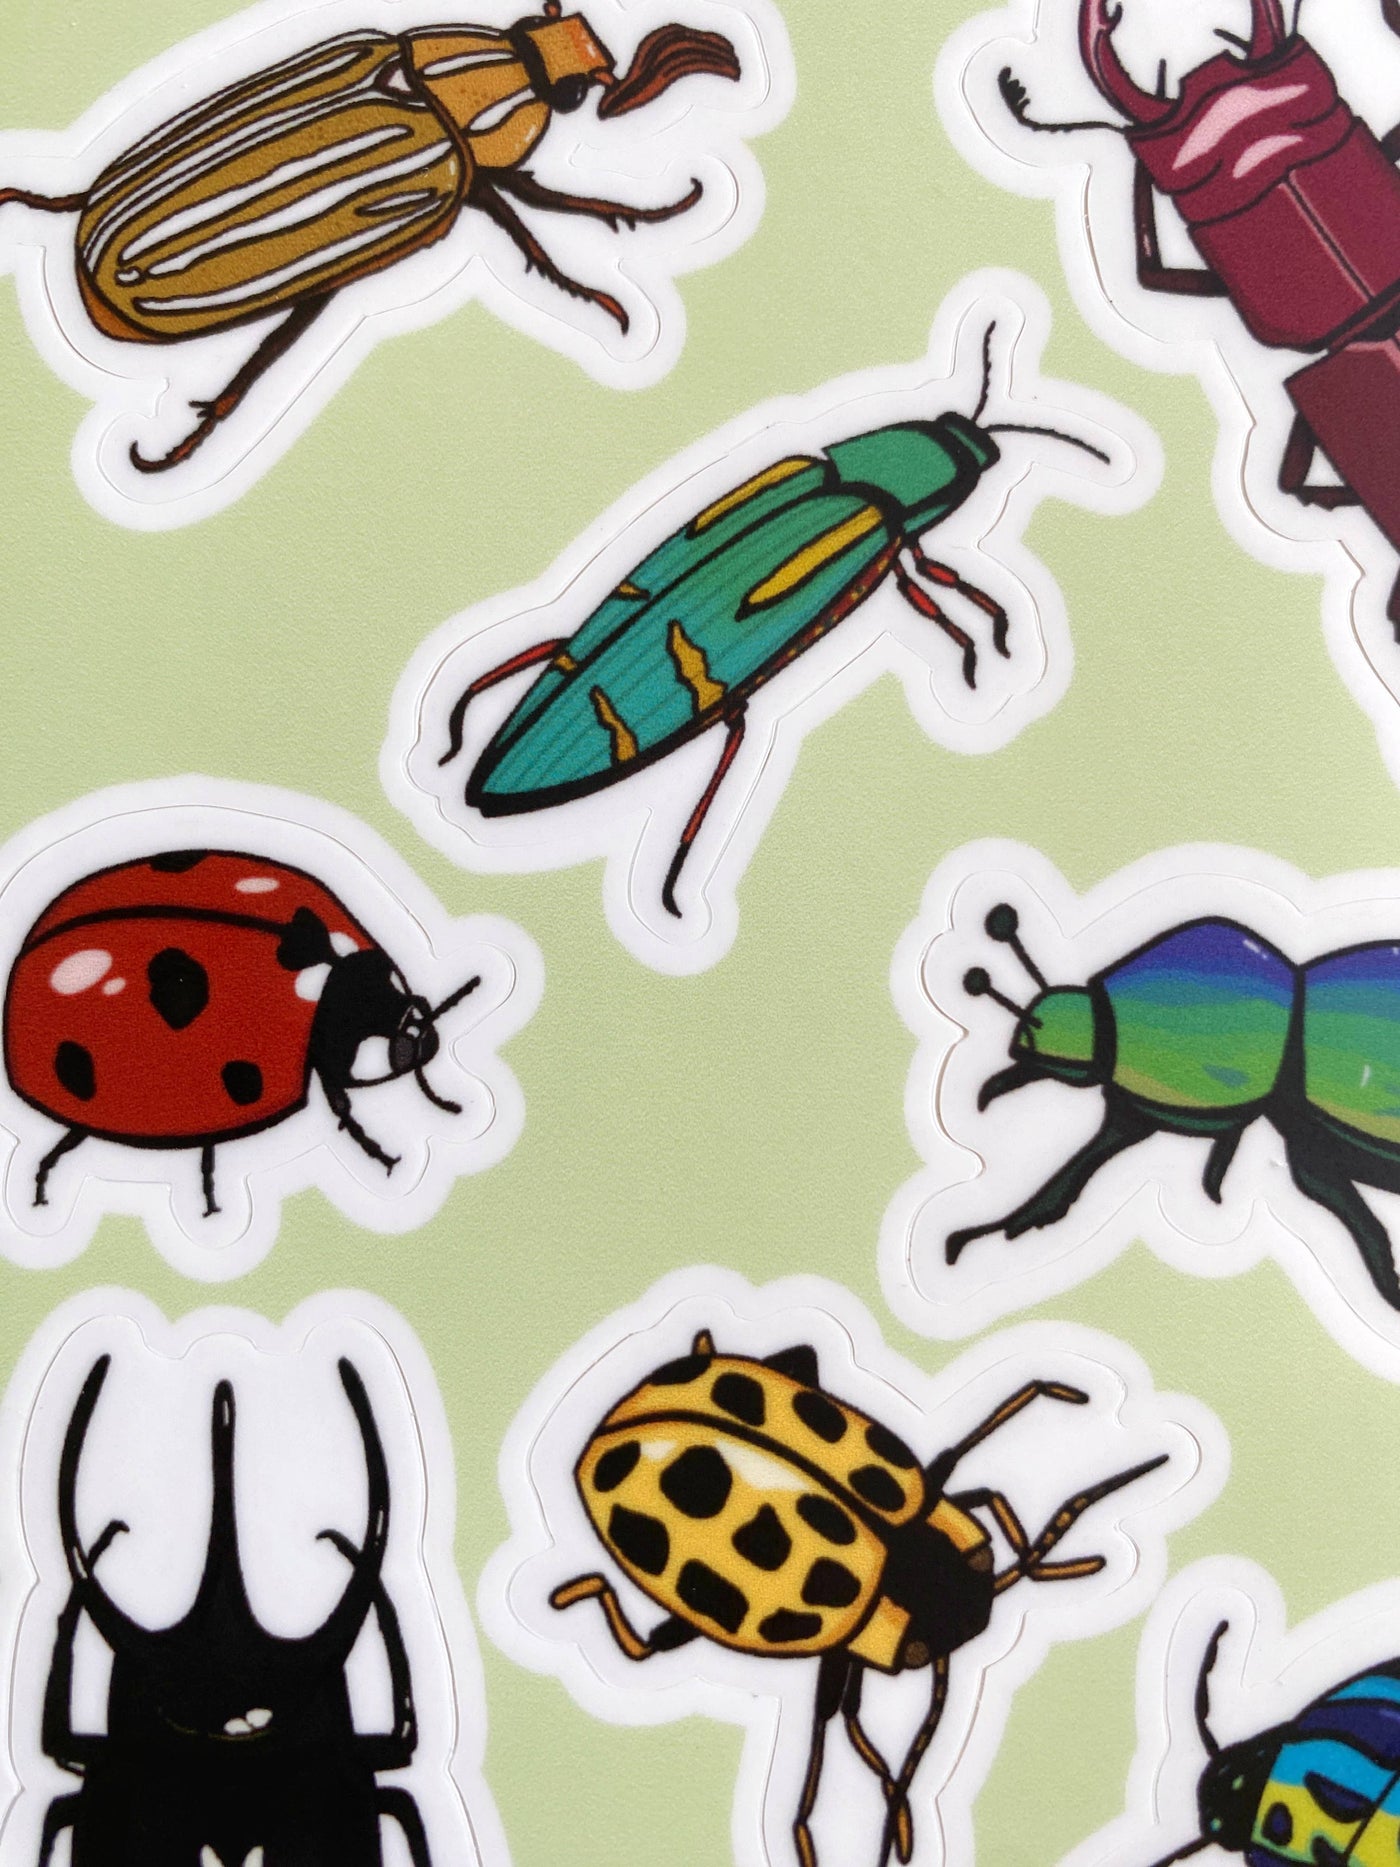 Beetle 4"x6" Sticker Sheet